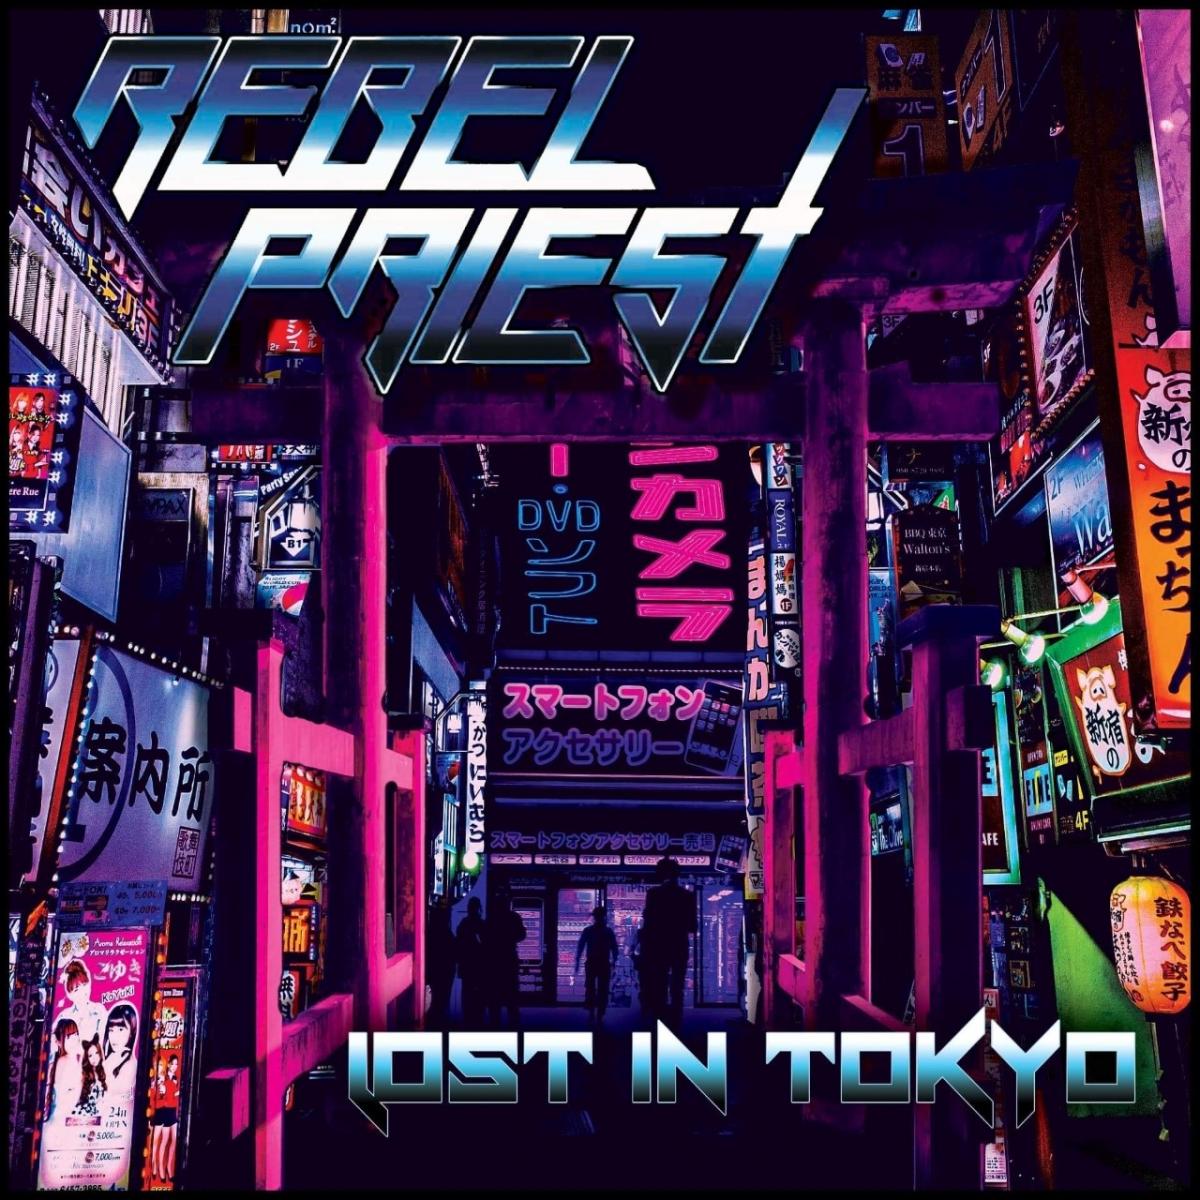 lost_in_tokyo_album_ep_cover.jpg